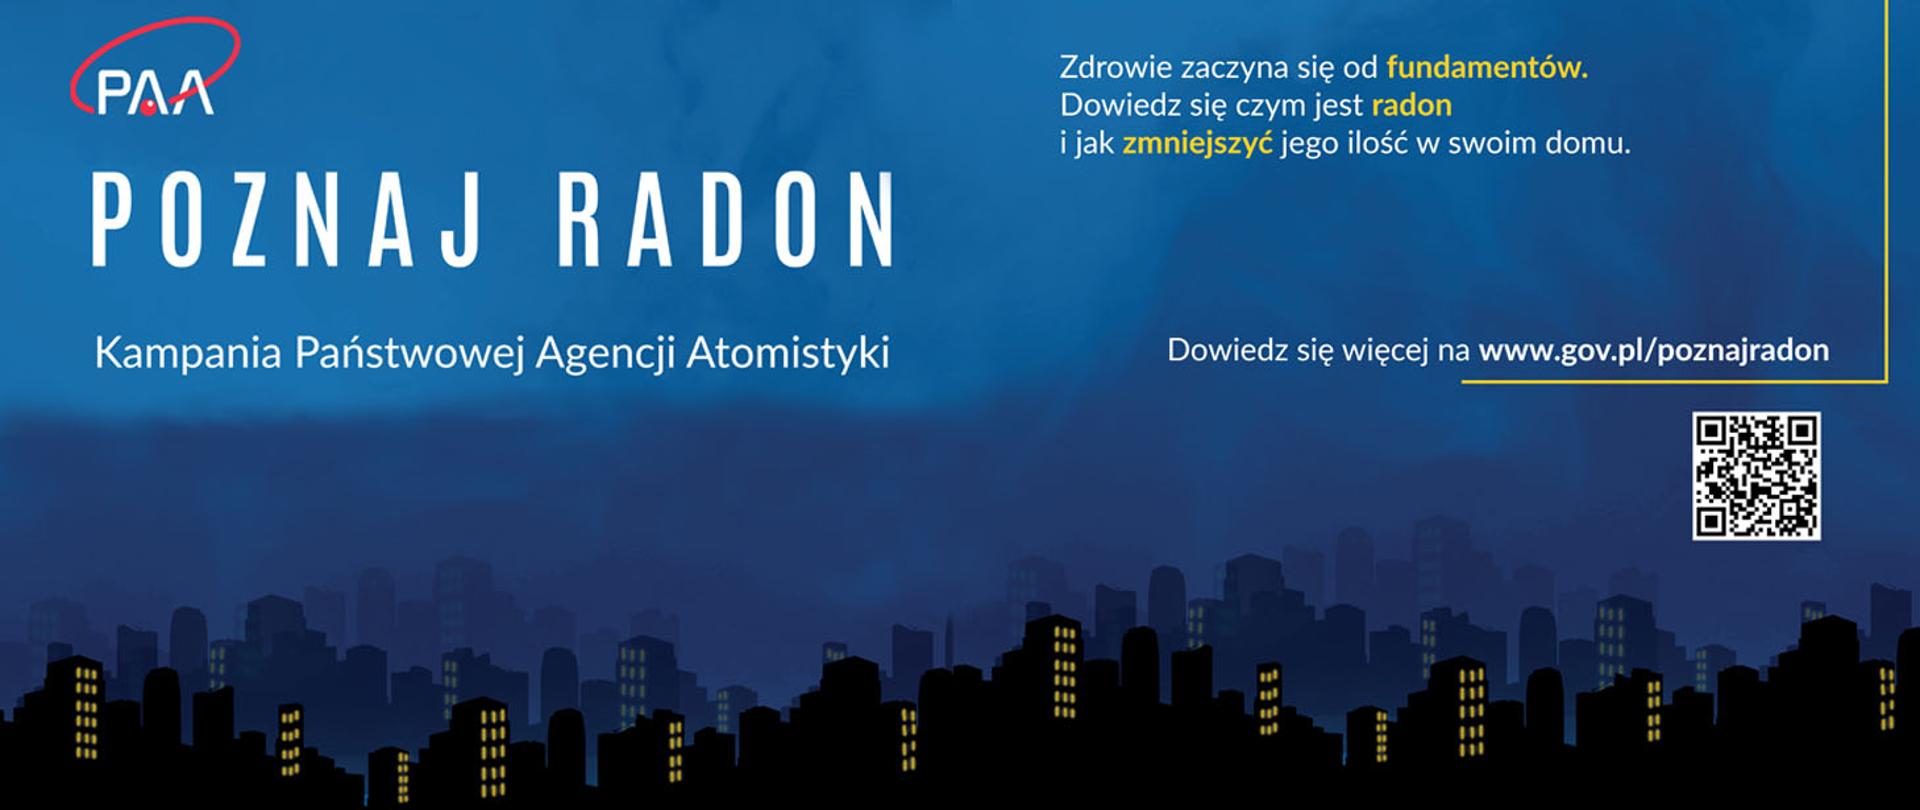 Plakat kampanii "Poznaj radon"